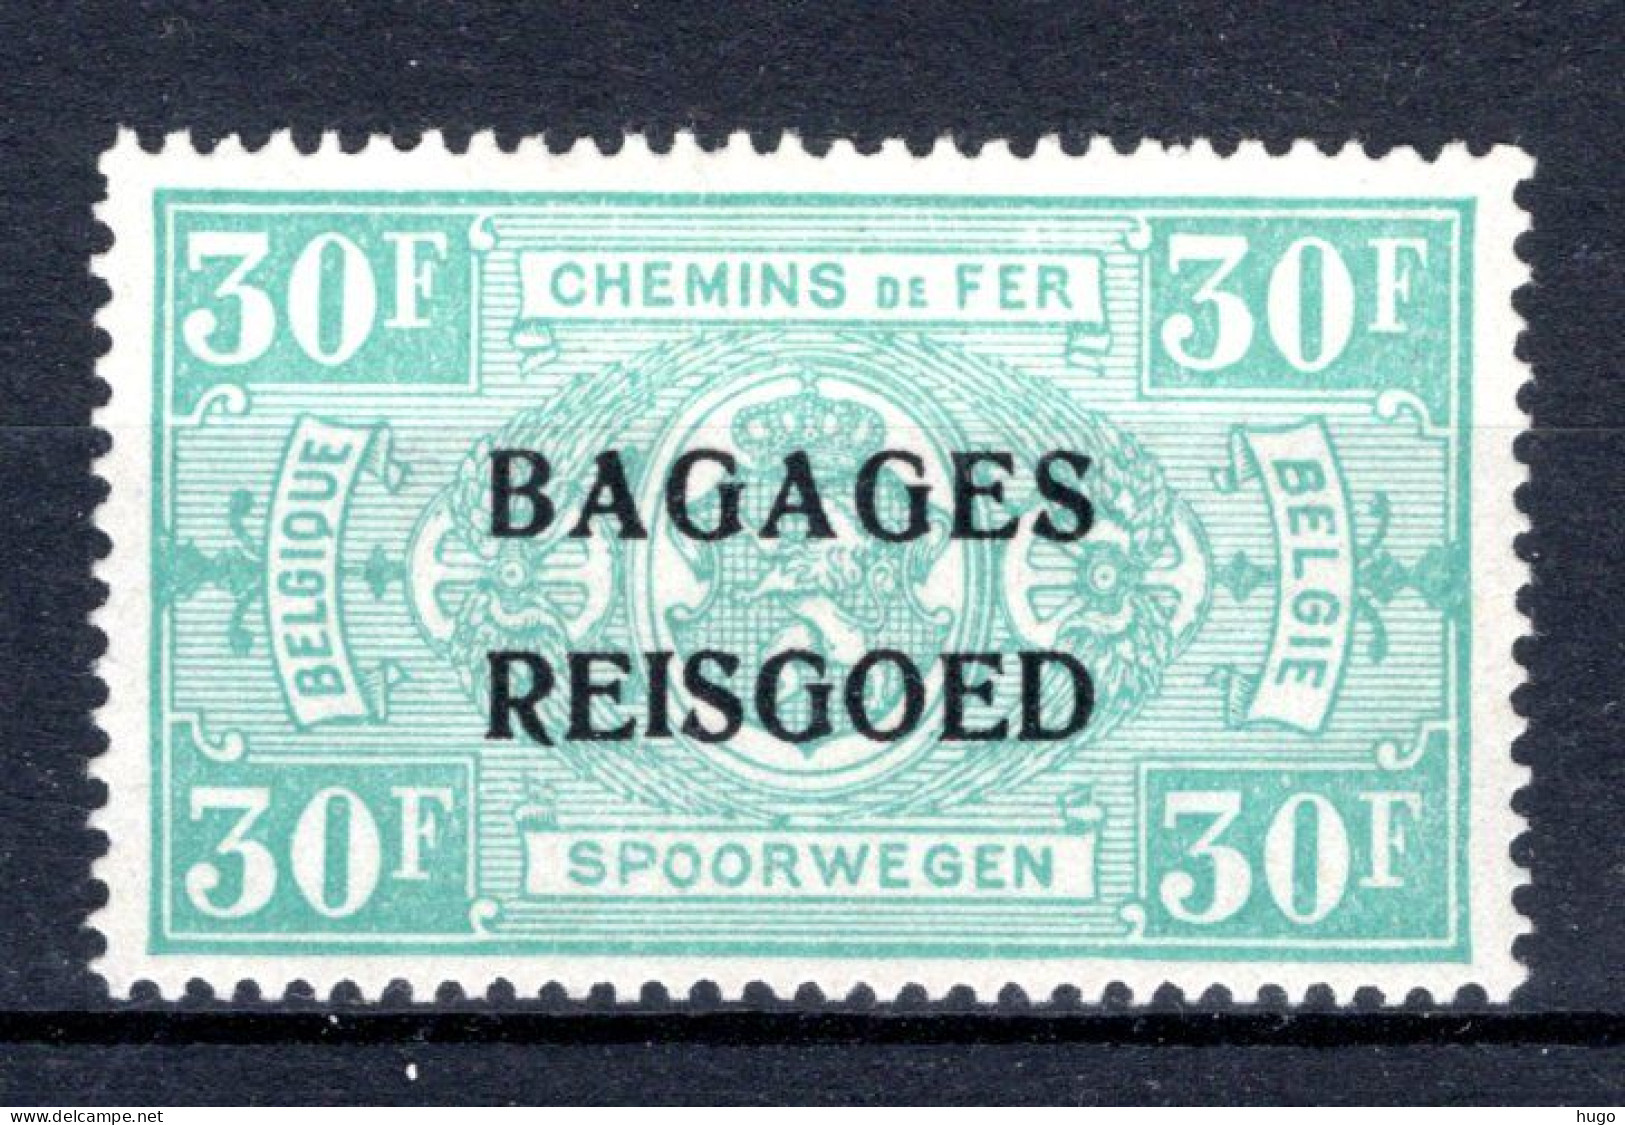 BA21 MH* 1935 - Spoorwegzegels Met Opdruk "BAGAGES - REISGOED" - Sot - Bagages [BA]